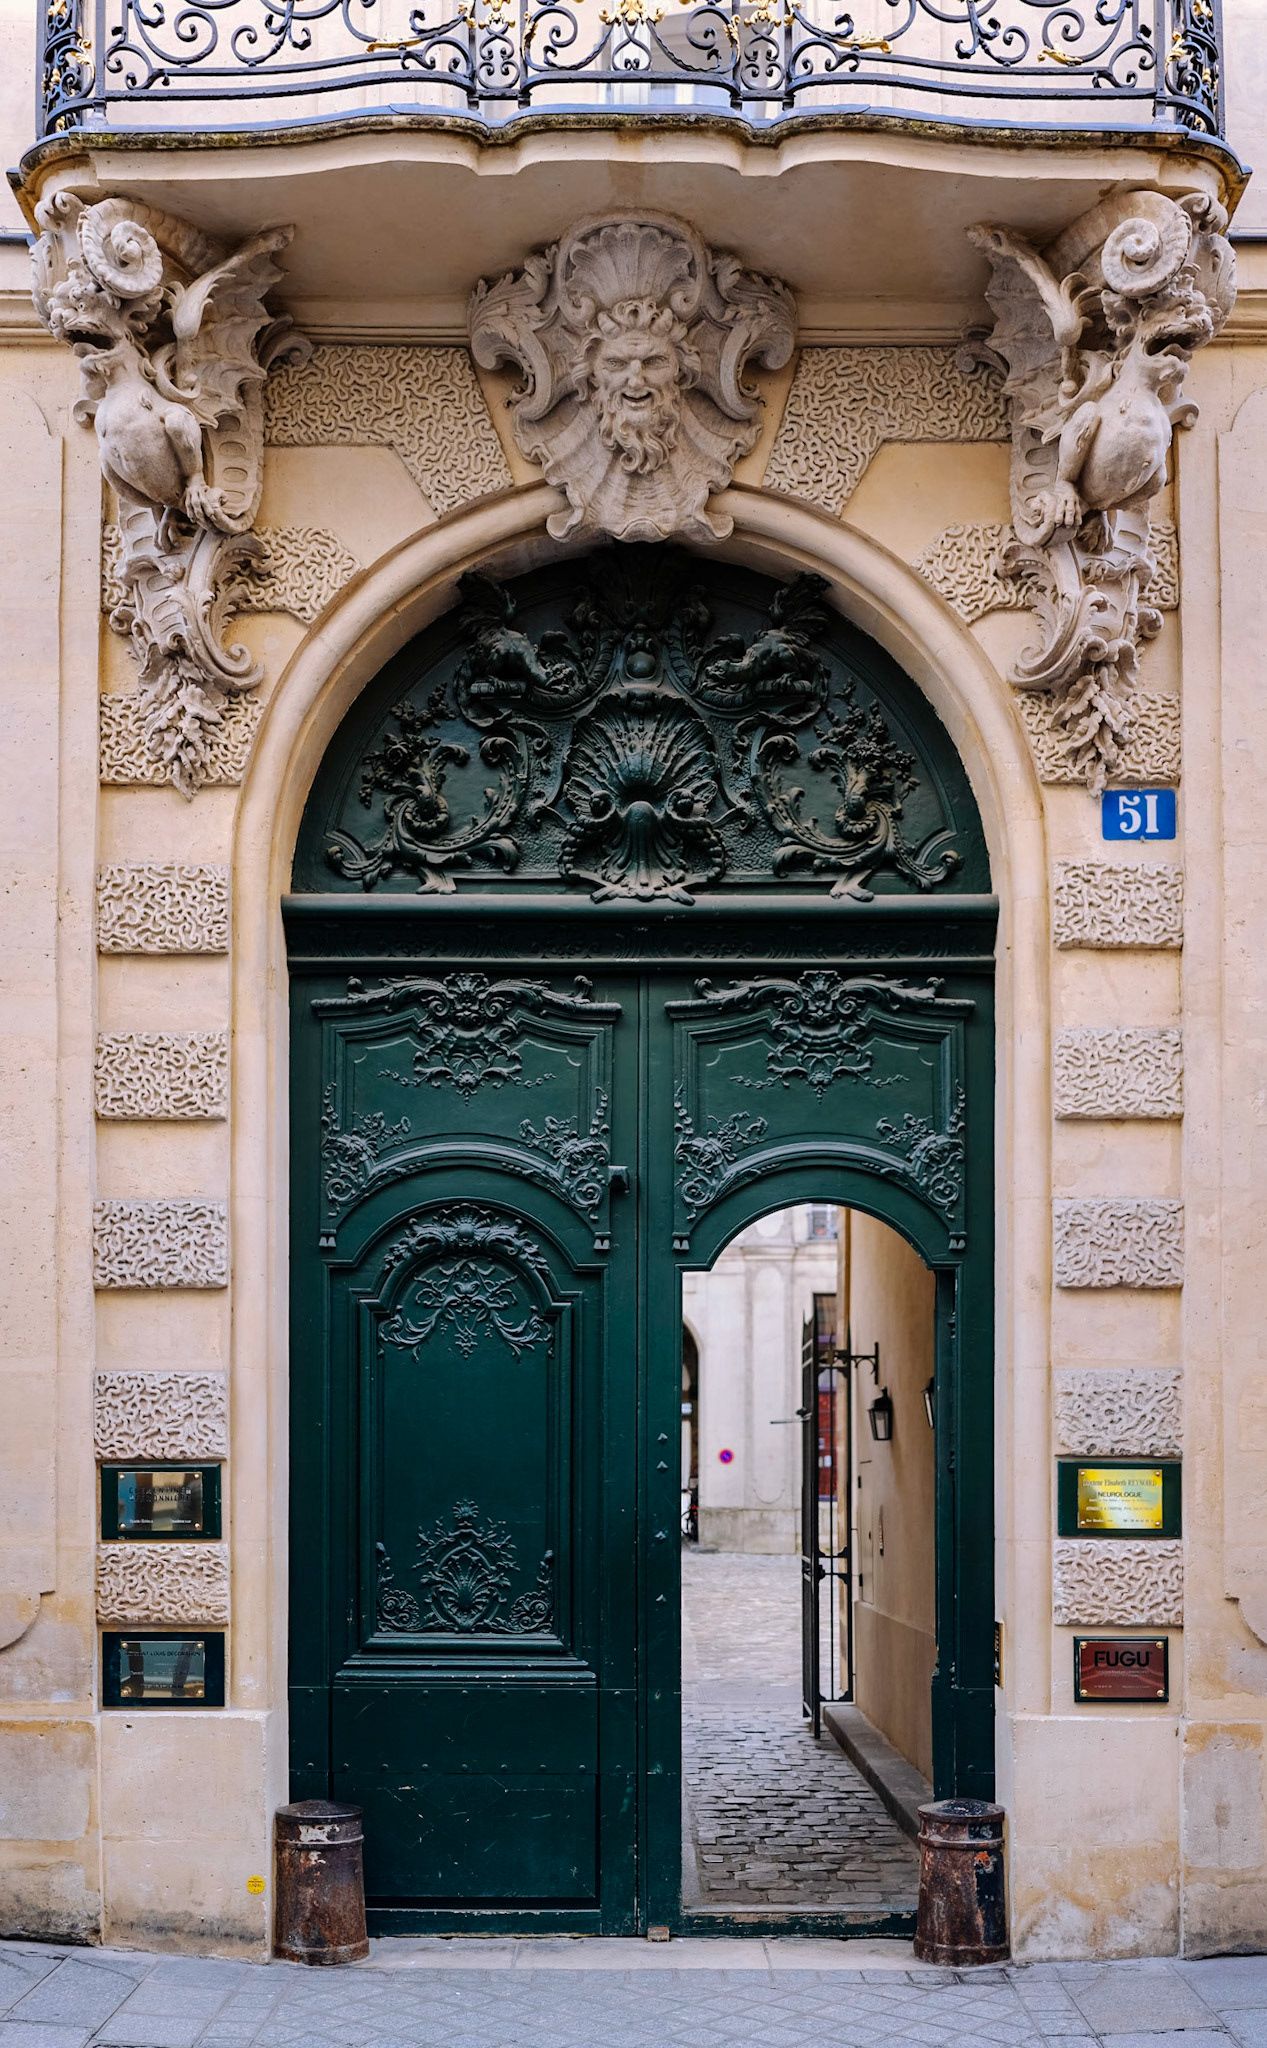 Decorative courtyard entrance in Paris